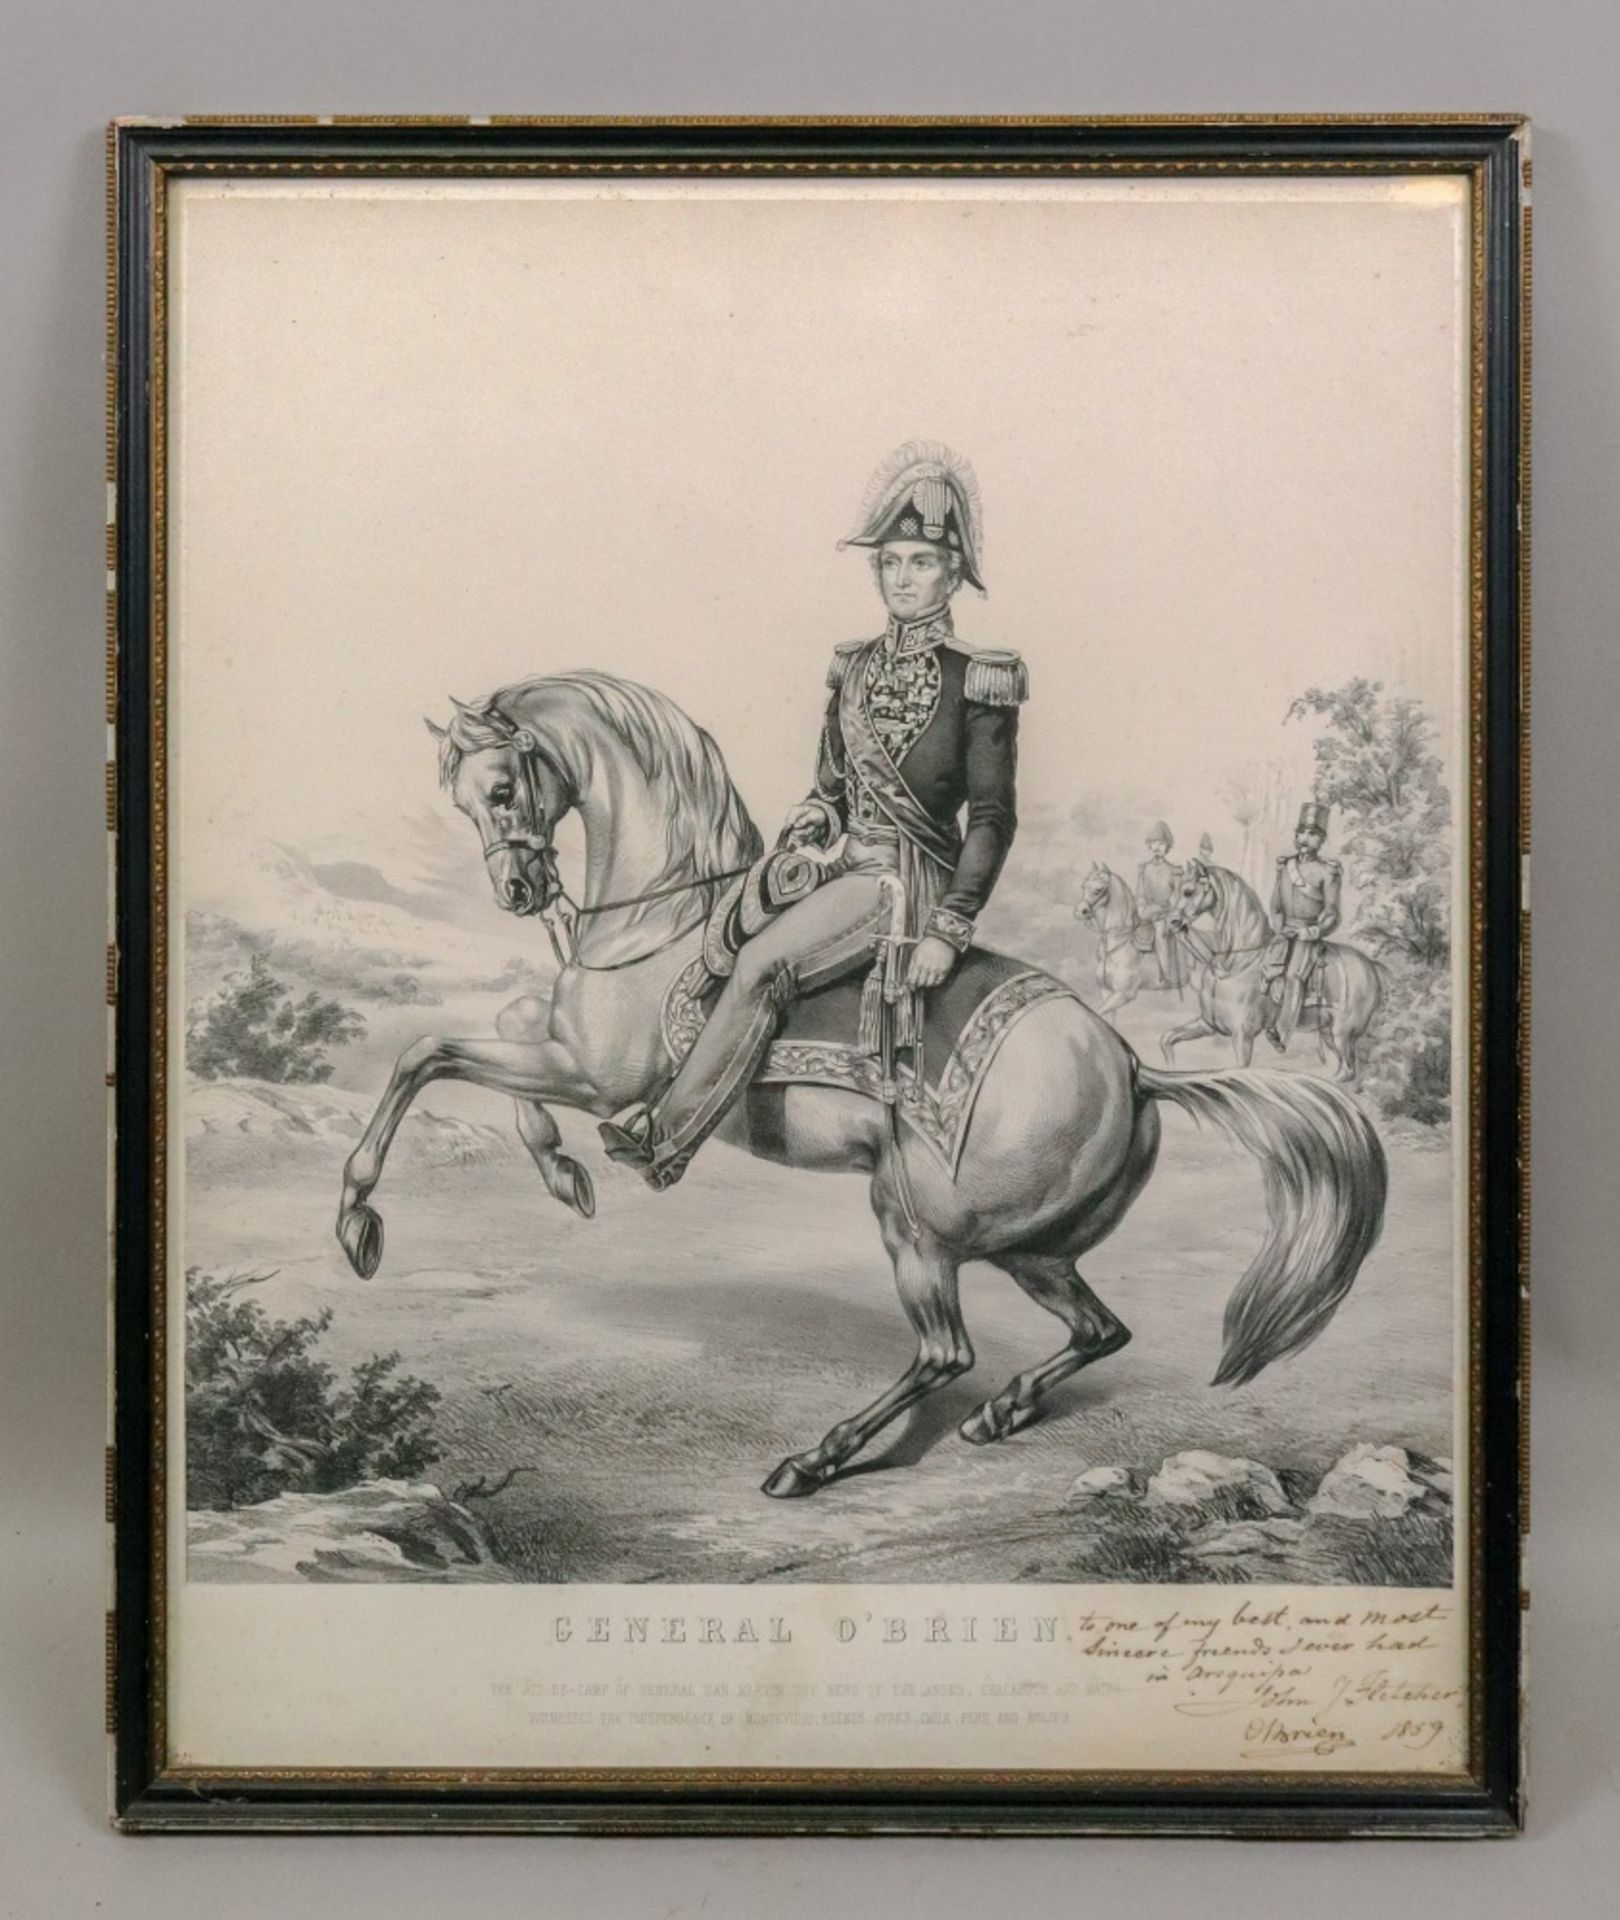 A print of General O'Brien on horseback, - Image 3 of 3